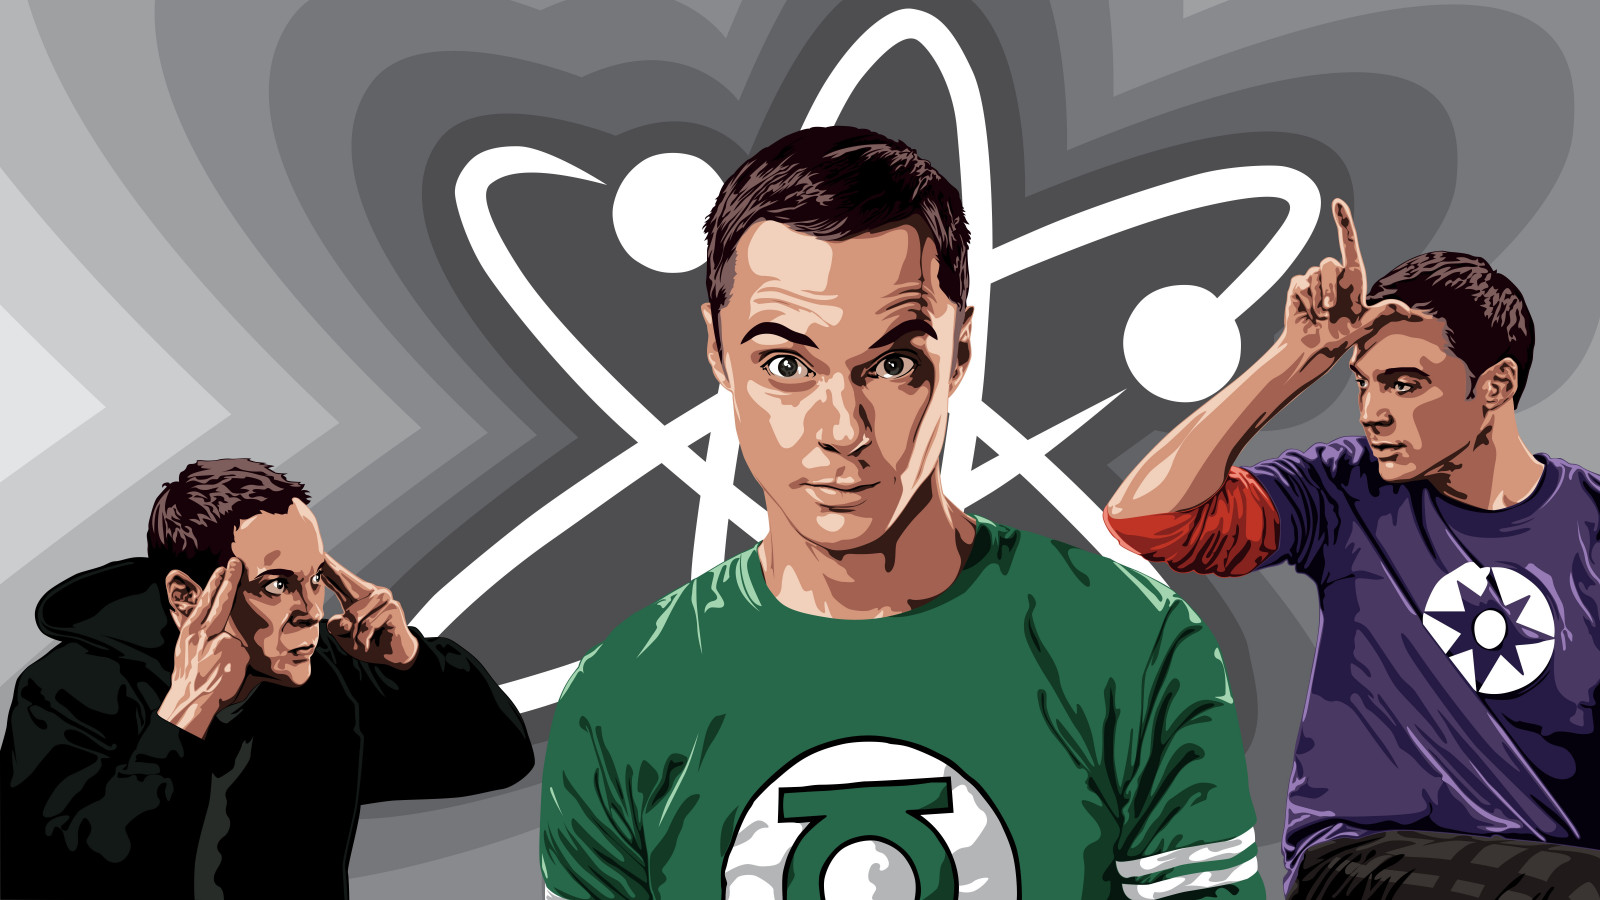 Wallpaper, illustration, cartoon, TV, brand, The Big Bang Theory, Sheldon Cooper 8000x4500